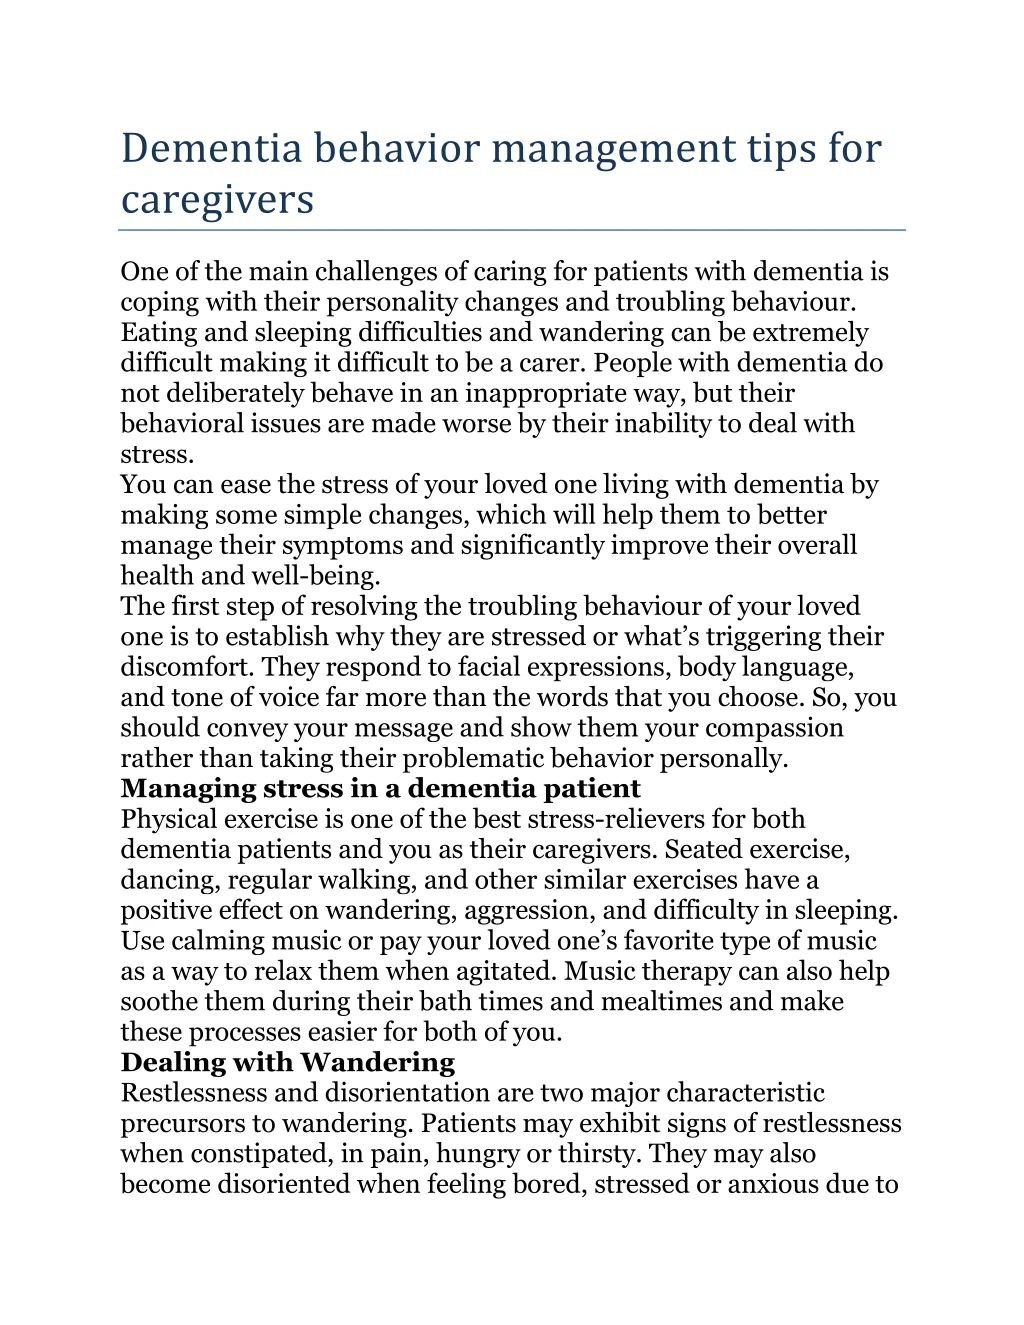 dementia behavior management tips for caregivers